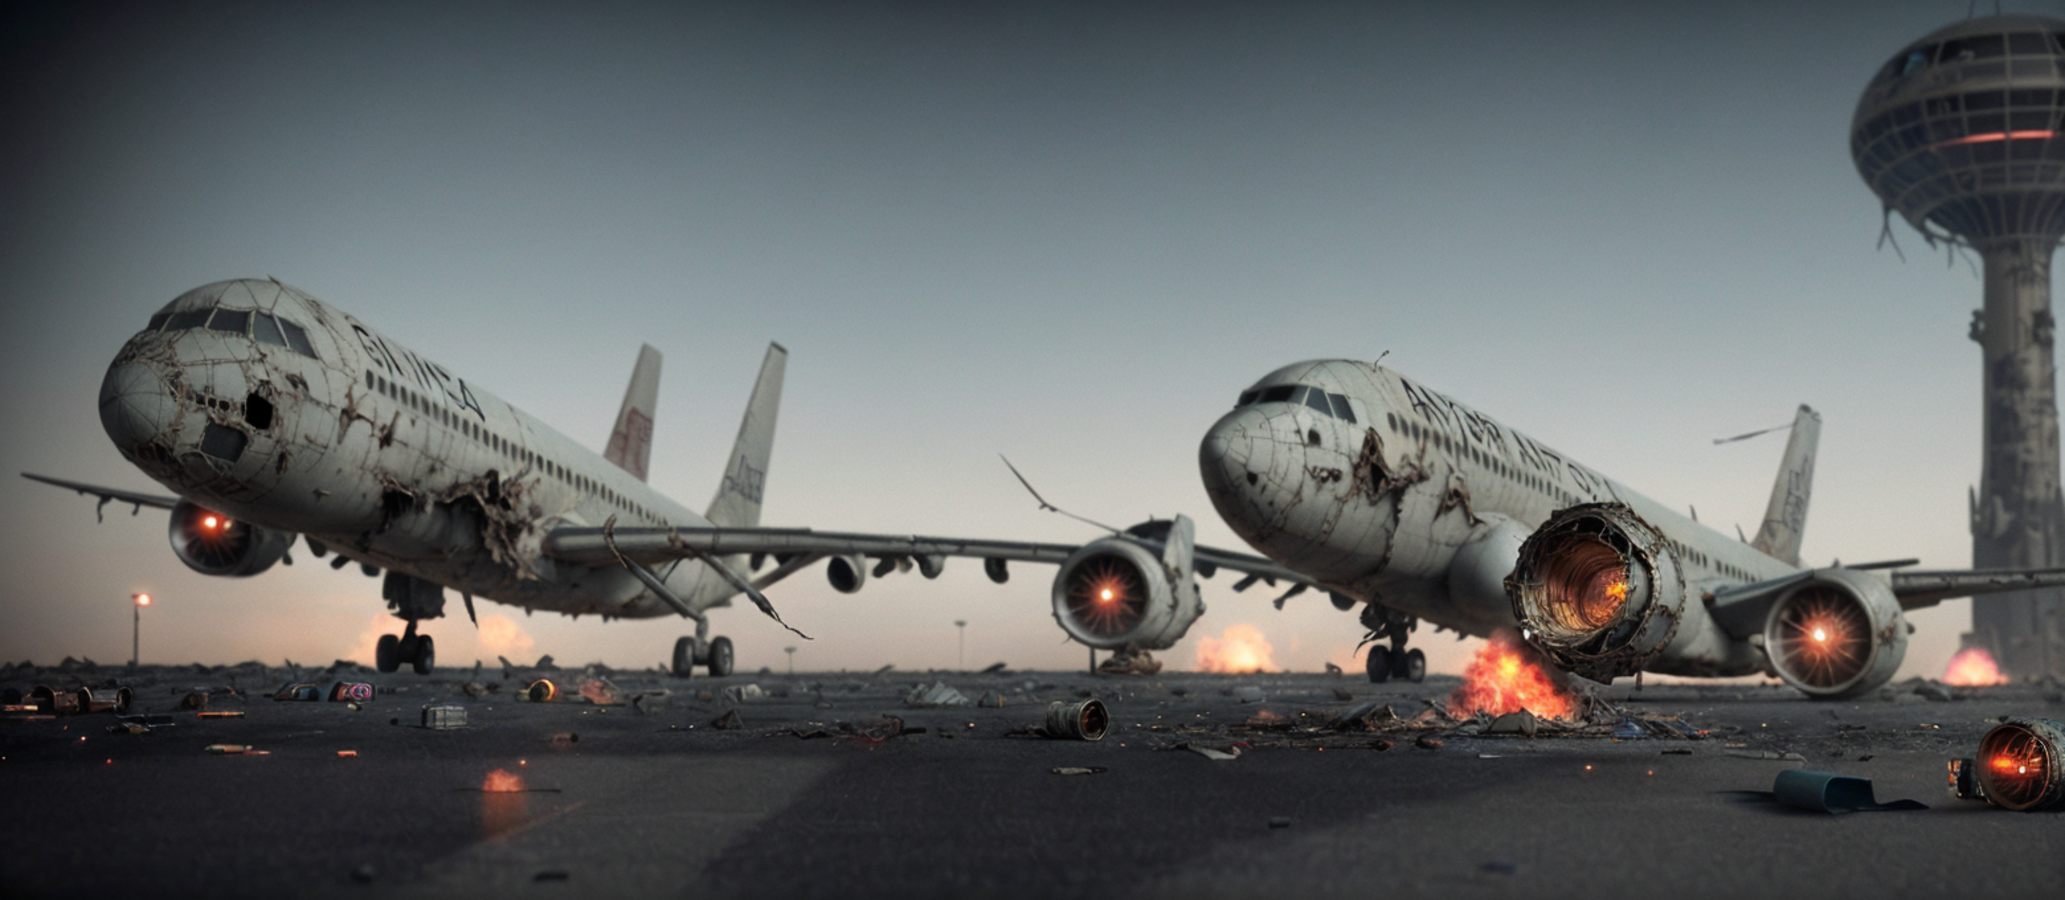 General 2065x900 AI art abandoned dystopian airplane wreck cinematic aircraft fire digital art